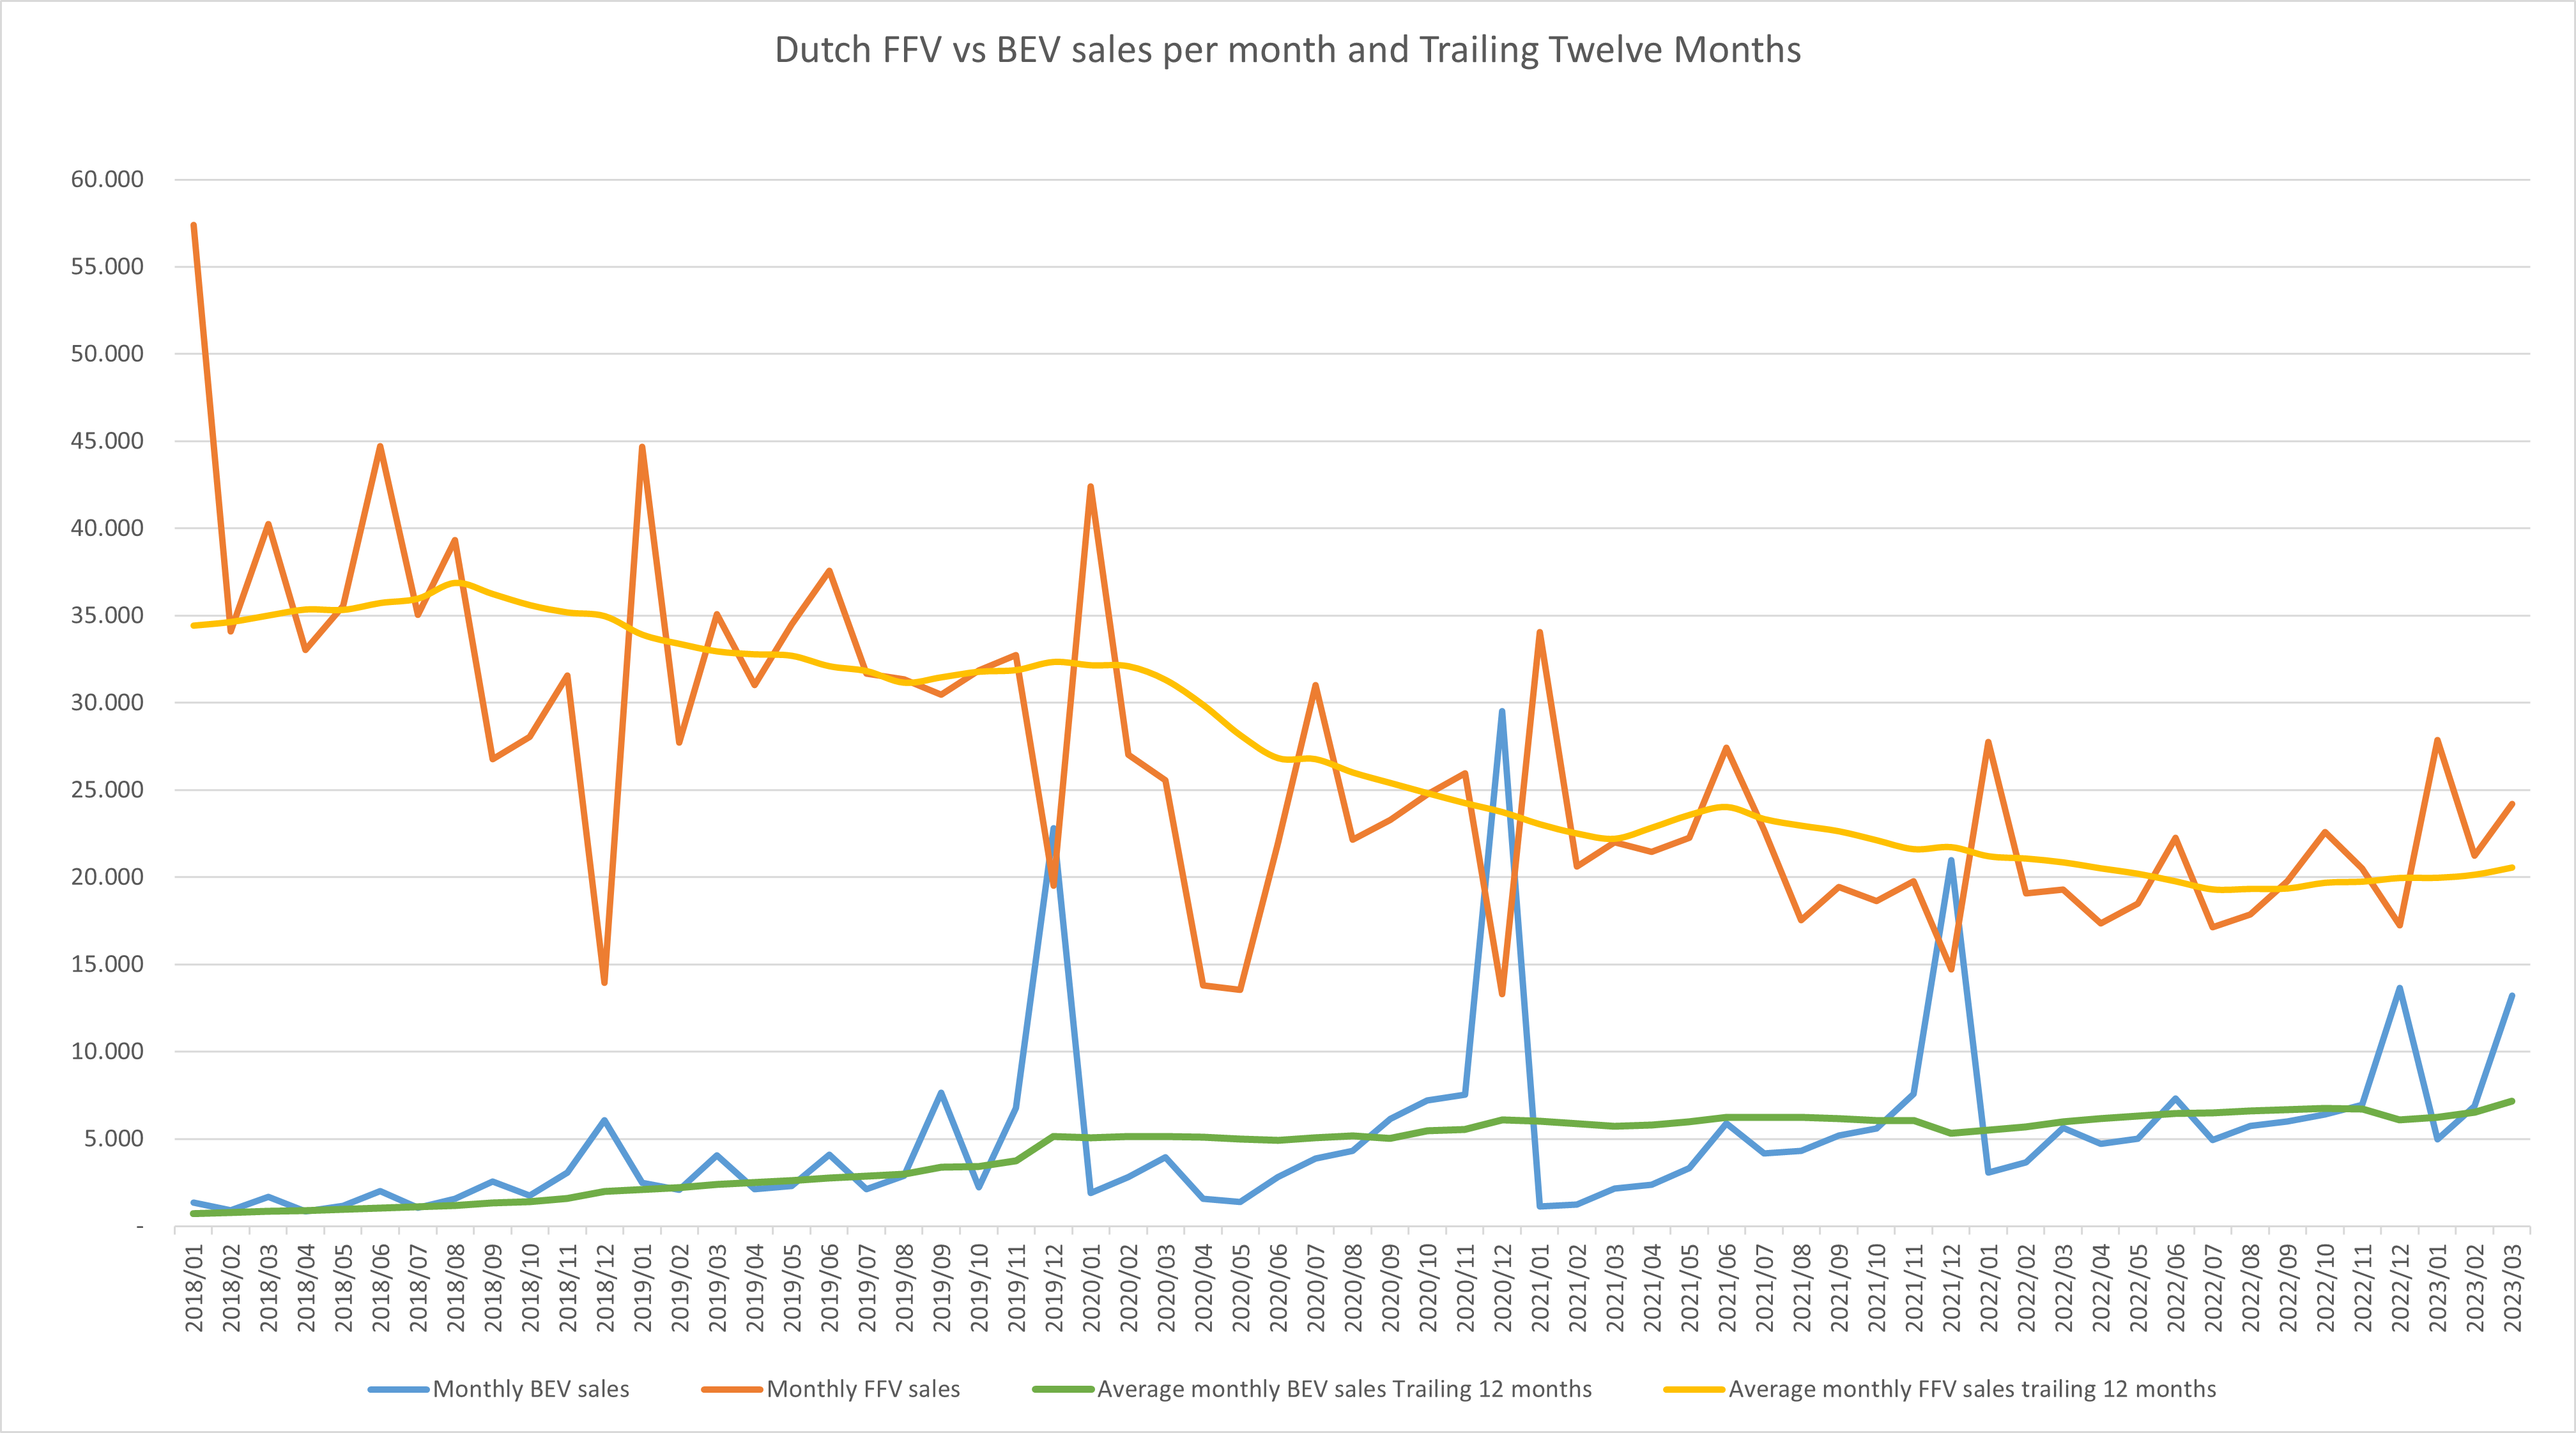 Dutch FFV vs BEV sales per month and Trailing Twelve Months